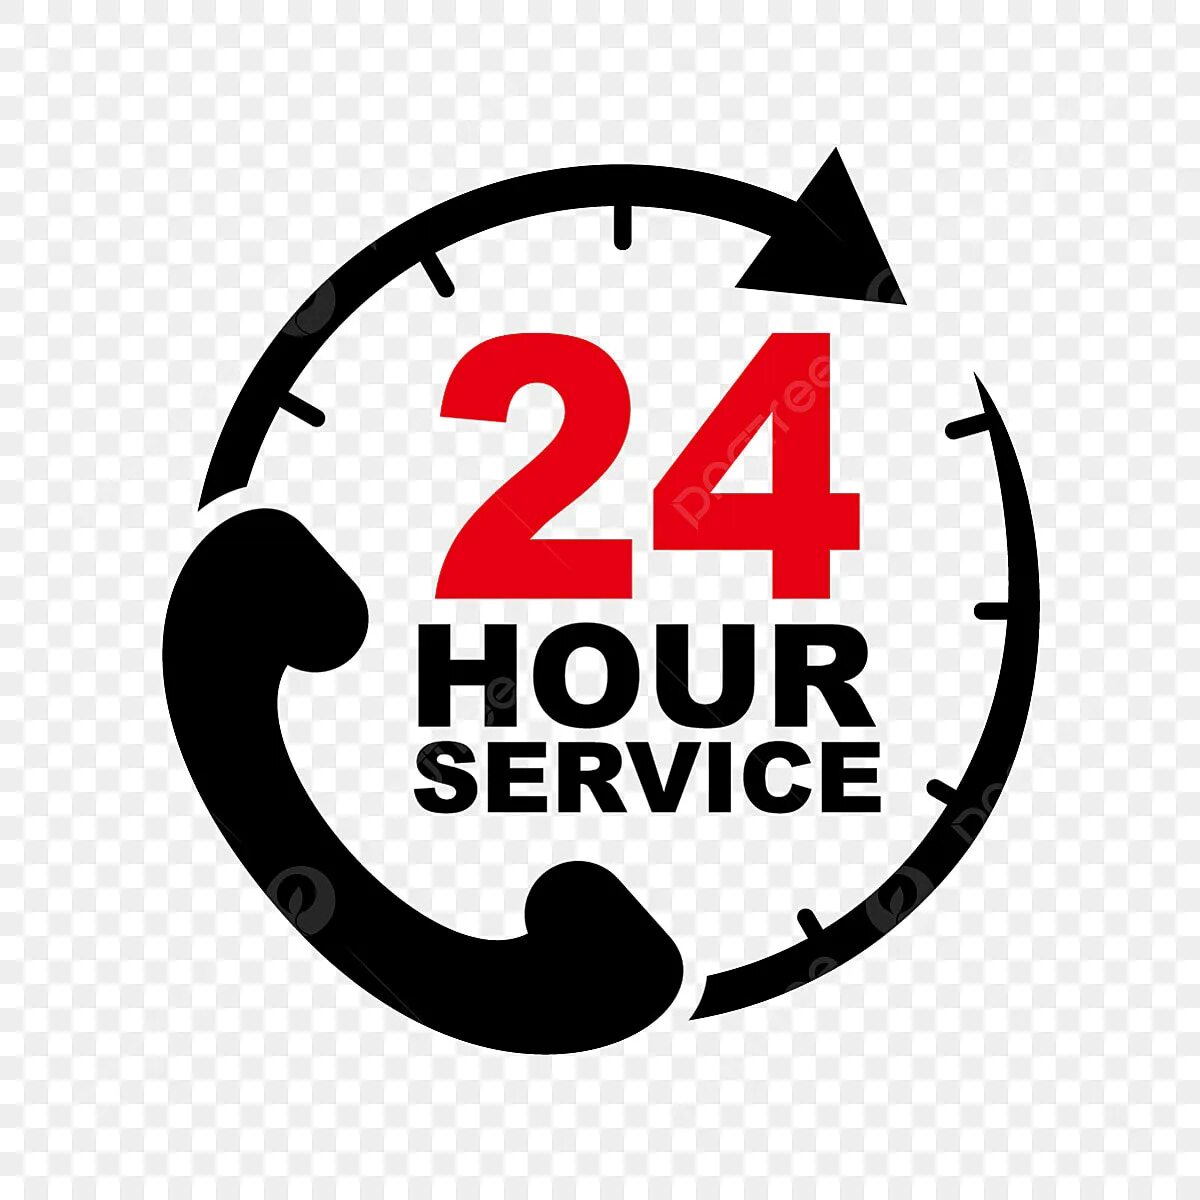 24 Hours service. Лого за 24 часа. Открыто 24 часа PNG. 24 Hours to Live logo.